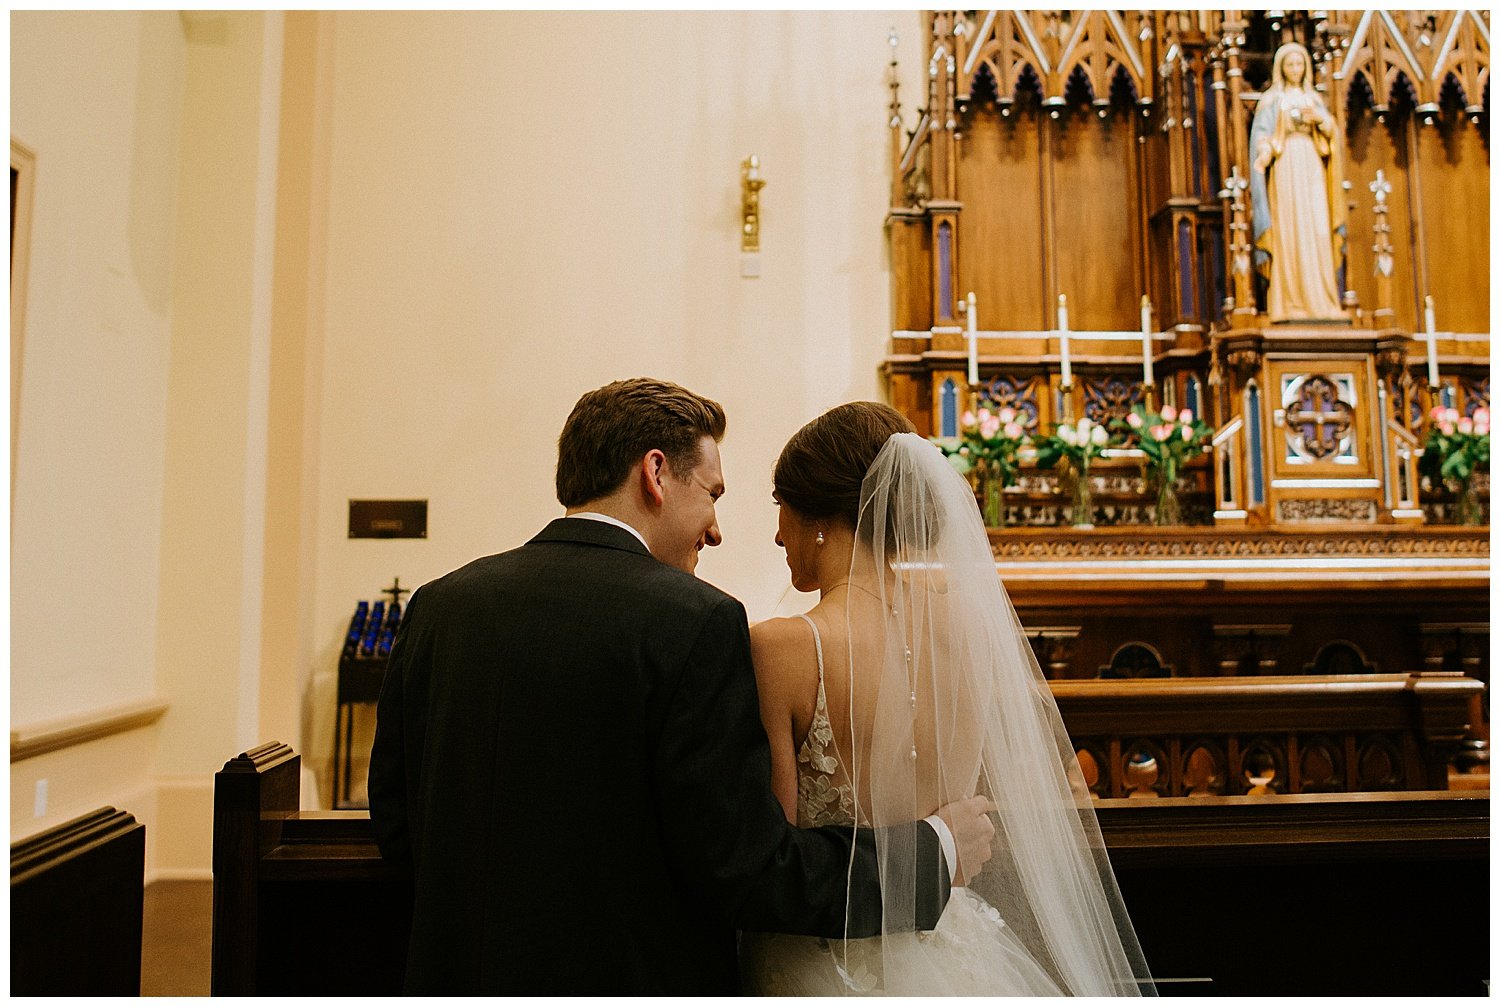 CHURCH BRIDAL BAPTISM RARE EDITIONS NEW GIRLS WHITE DRESS WITH SATIN WEDDING 